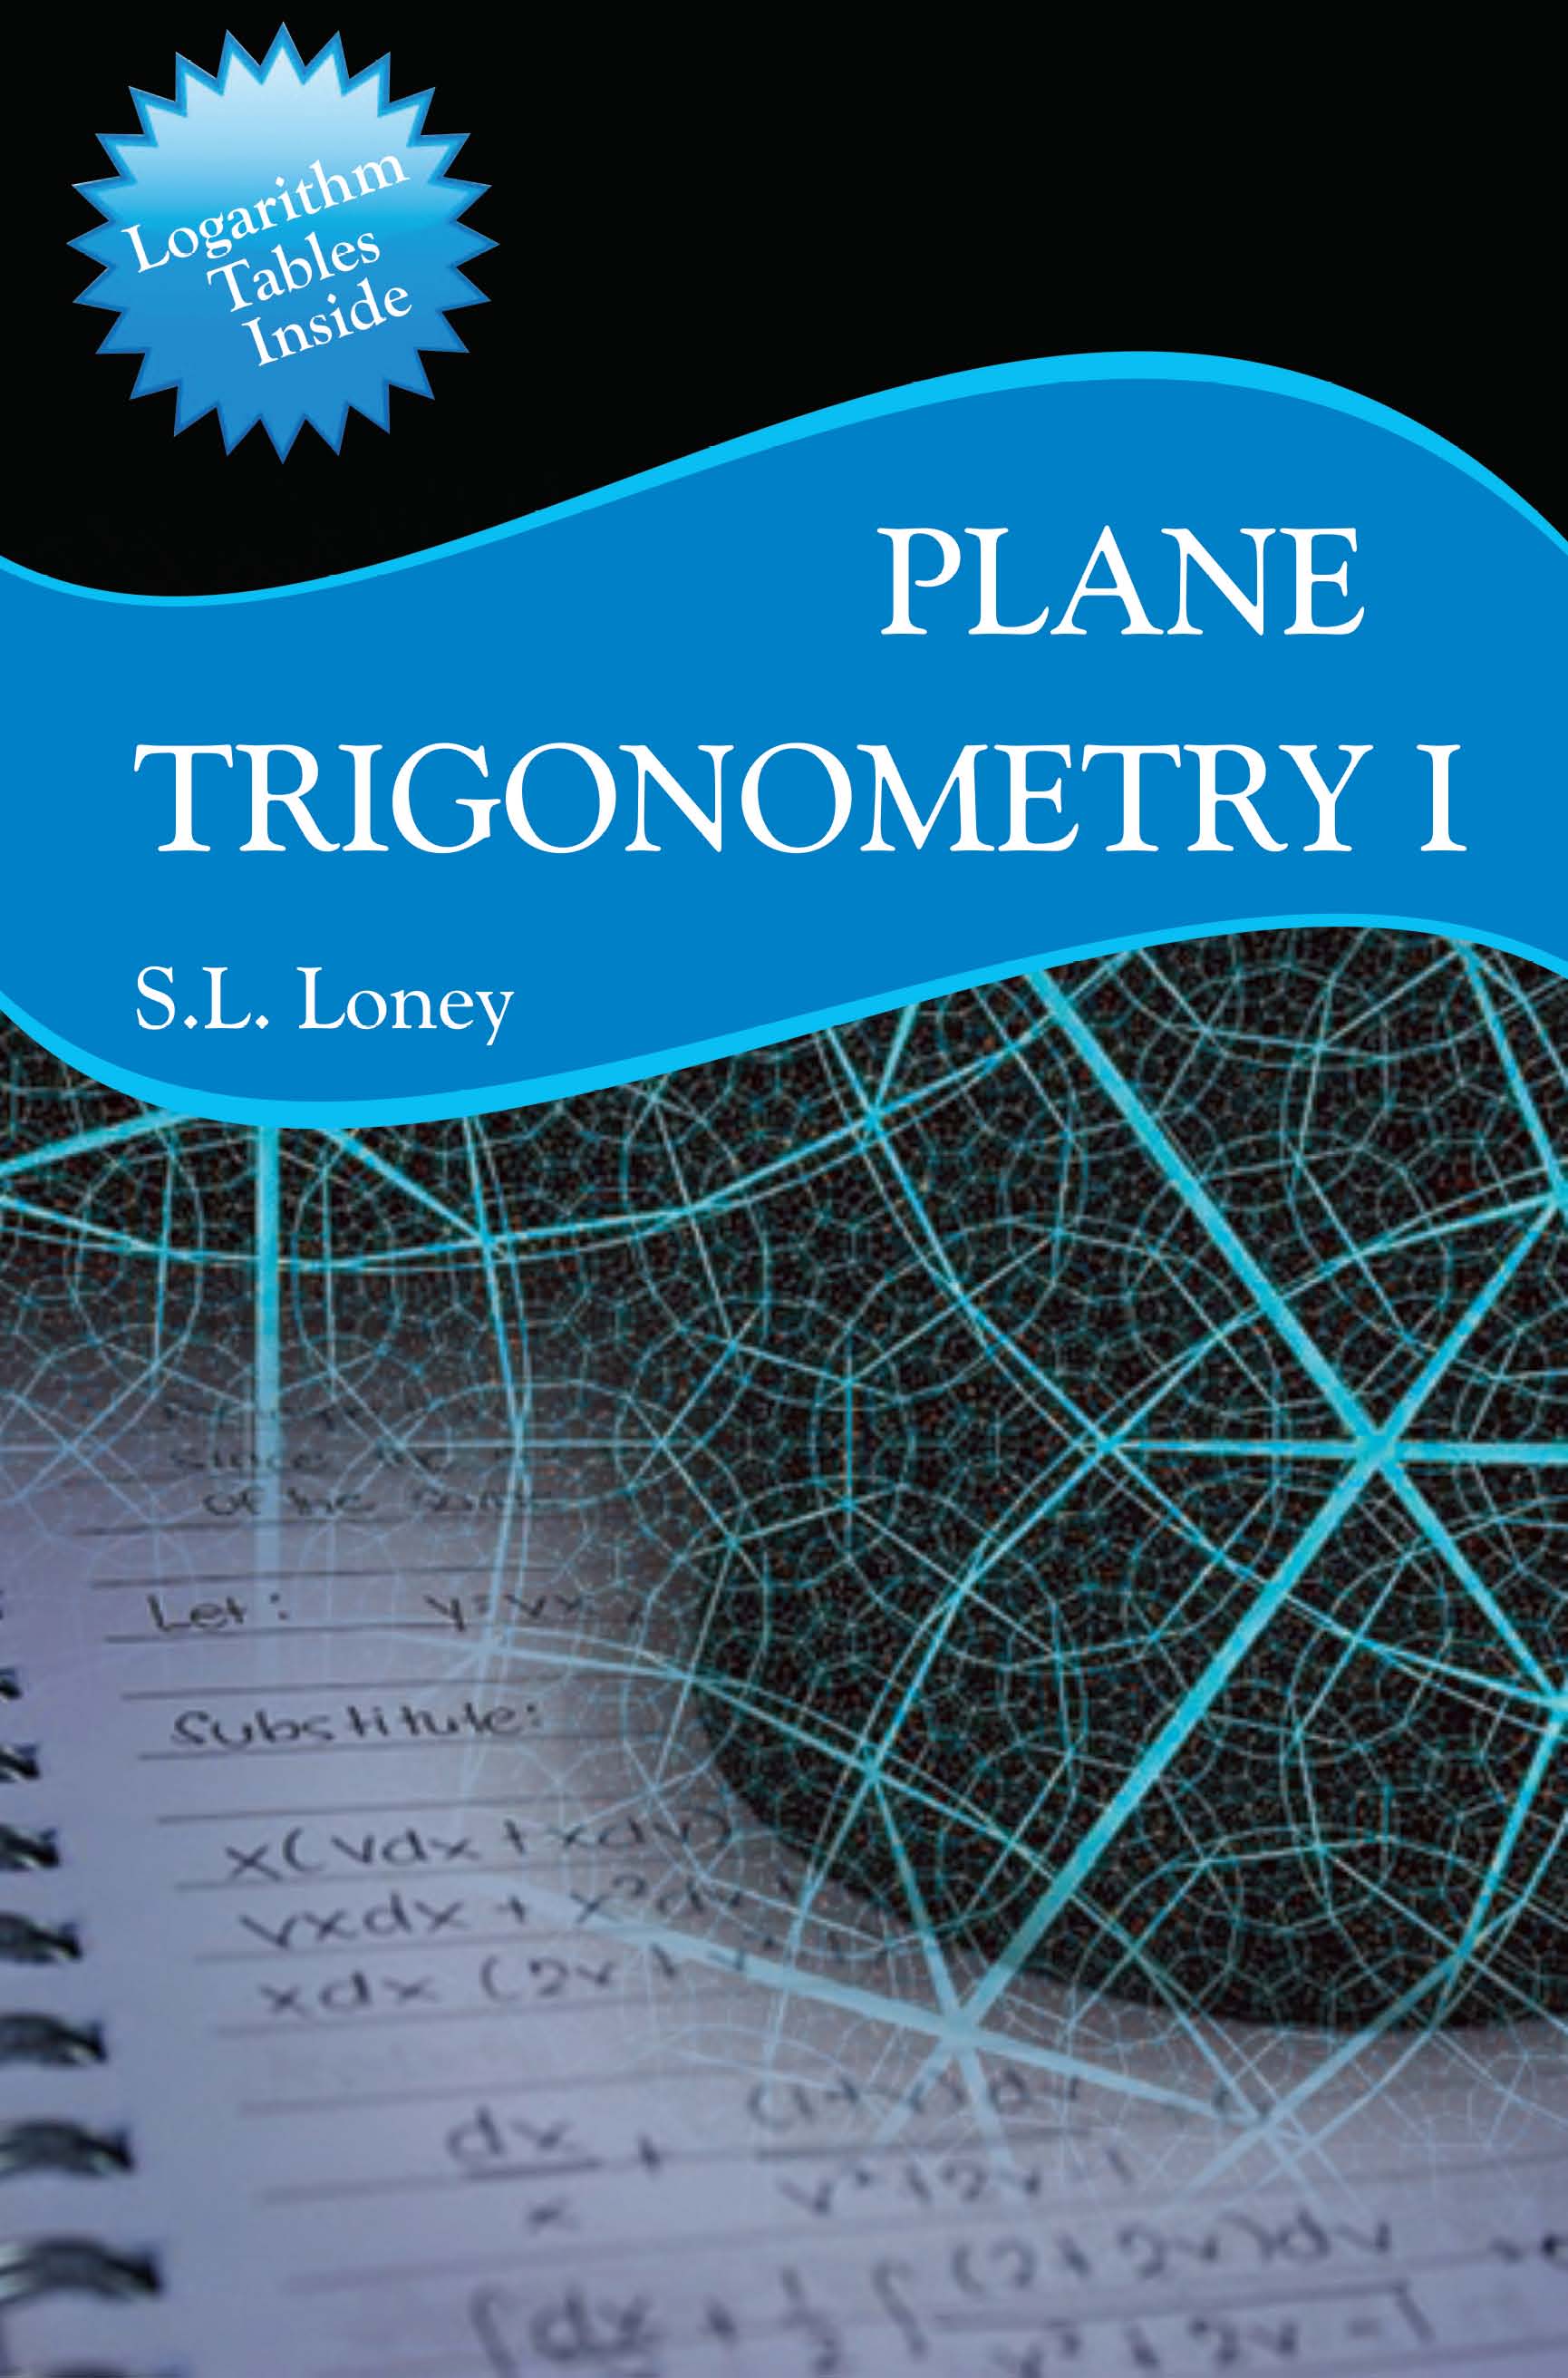 Plane Trigonometry Part 1